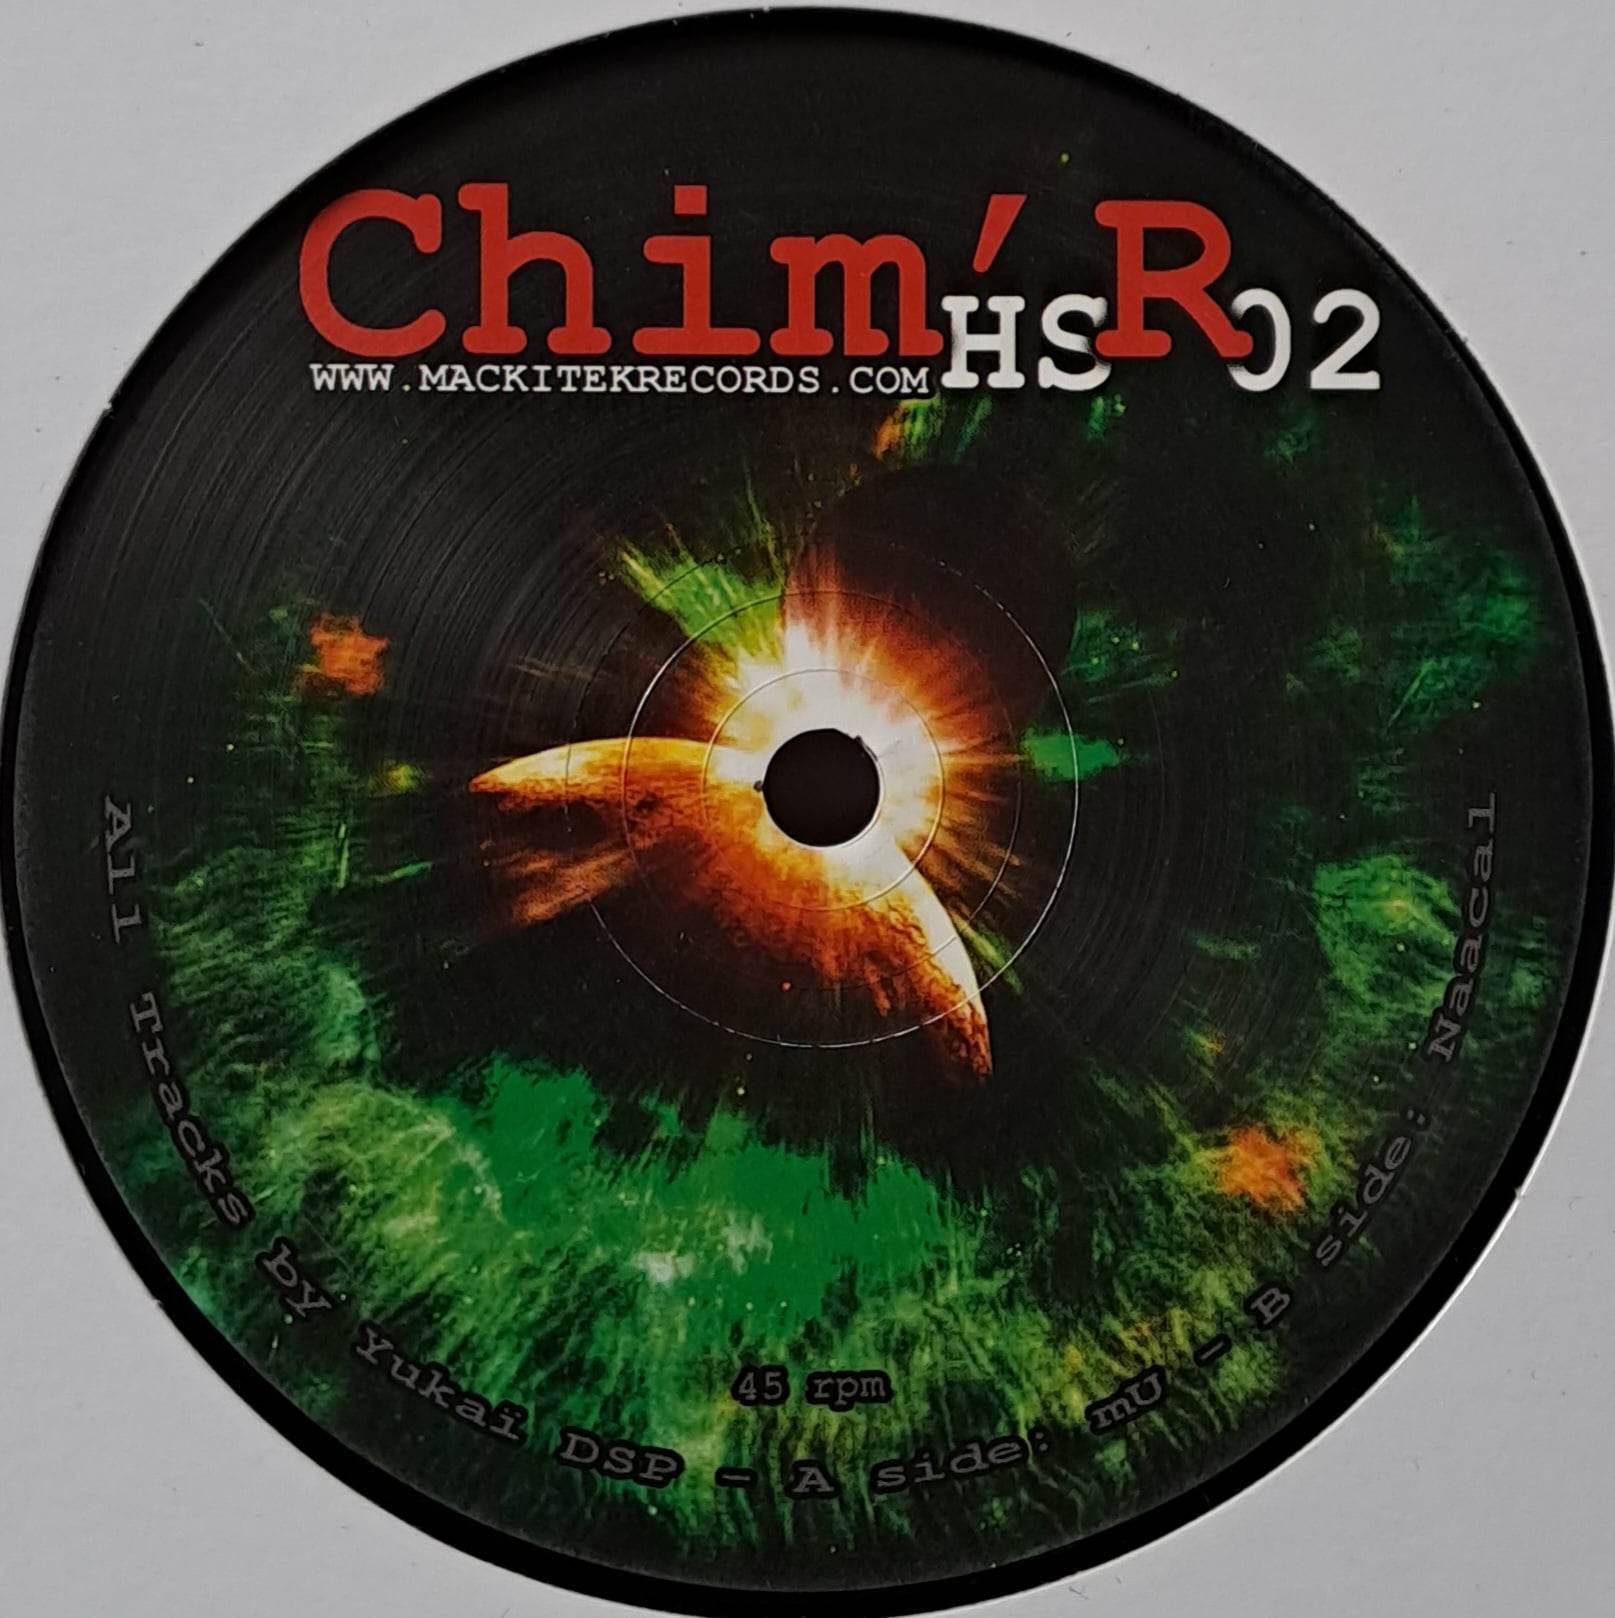 Chim'R HS 02 - vinyle acid